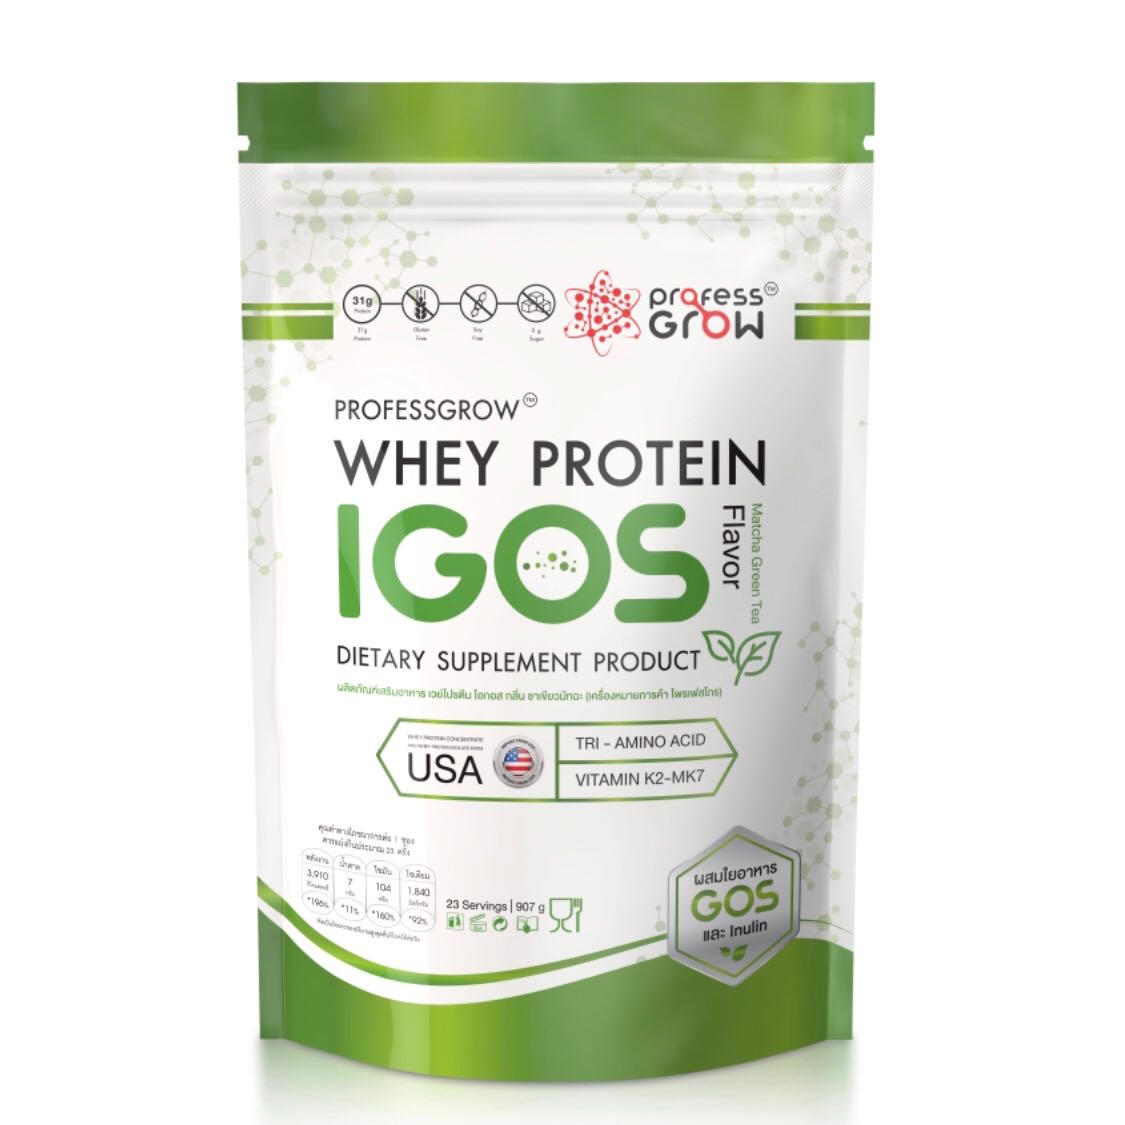 WHEY PROTEIN IGOS - เวย์โปรตีน ไอกอส นมโปรตีนเพิ่มความสูง